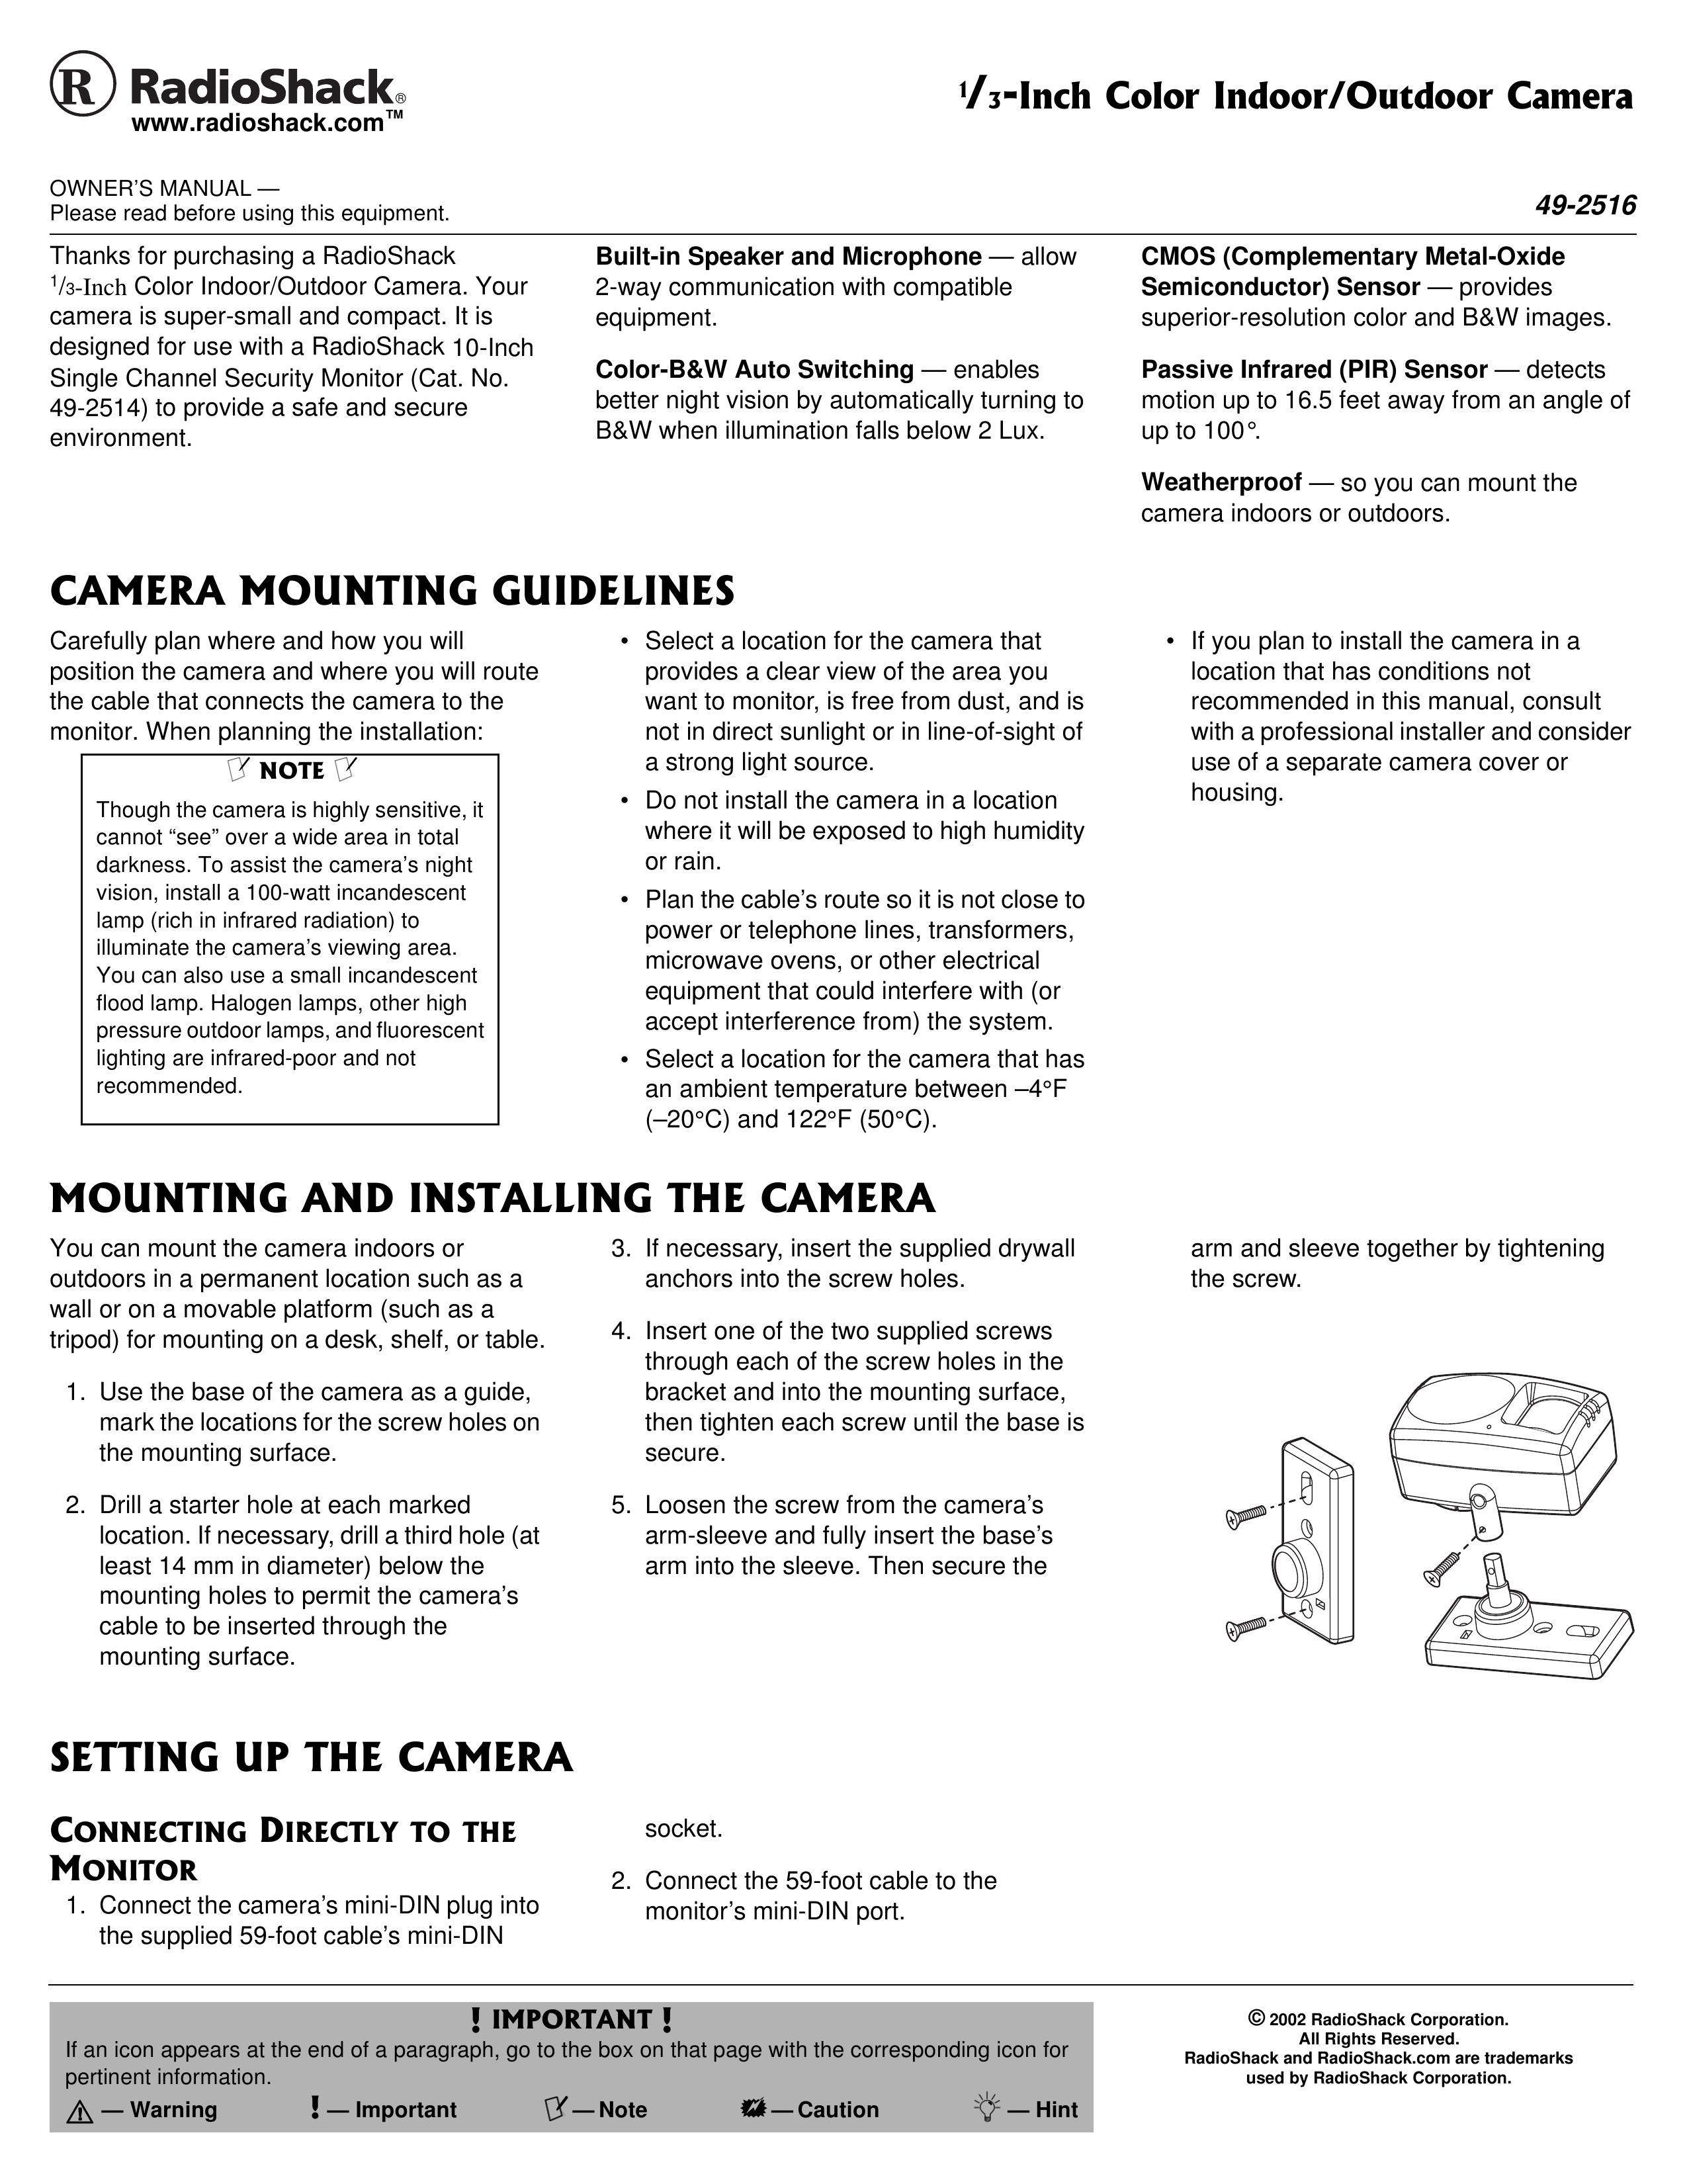 Samsung 49-2516 Security Camera User Manual